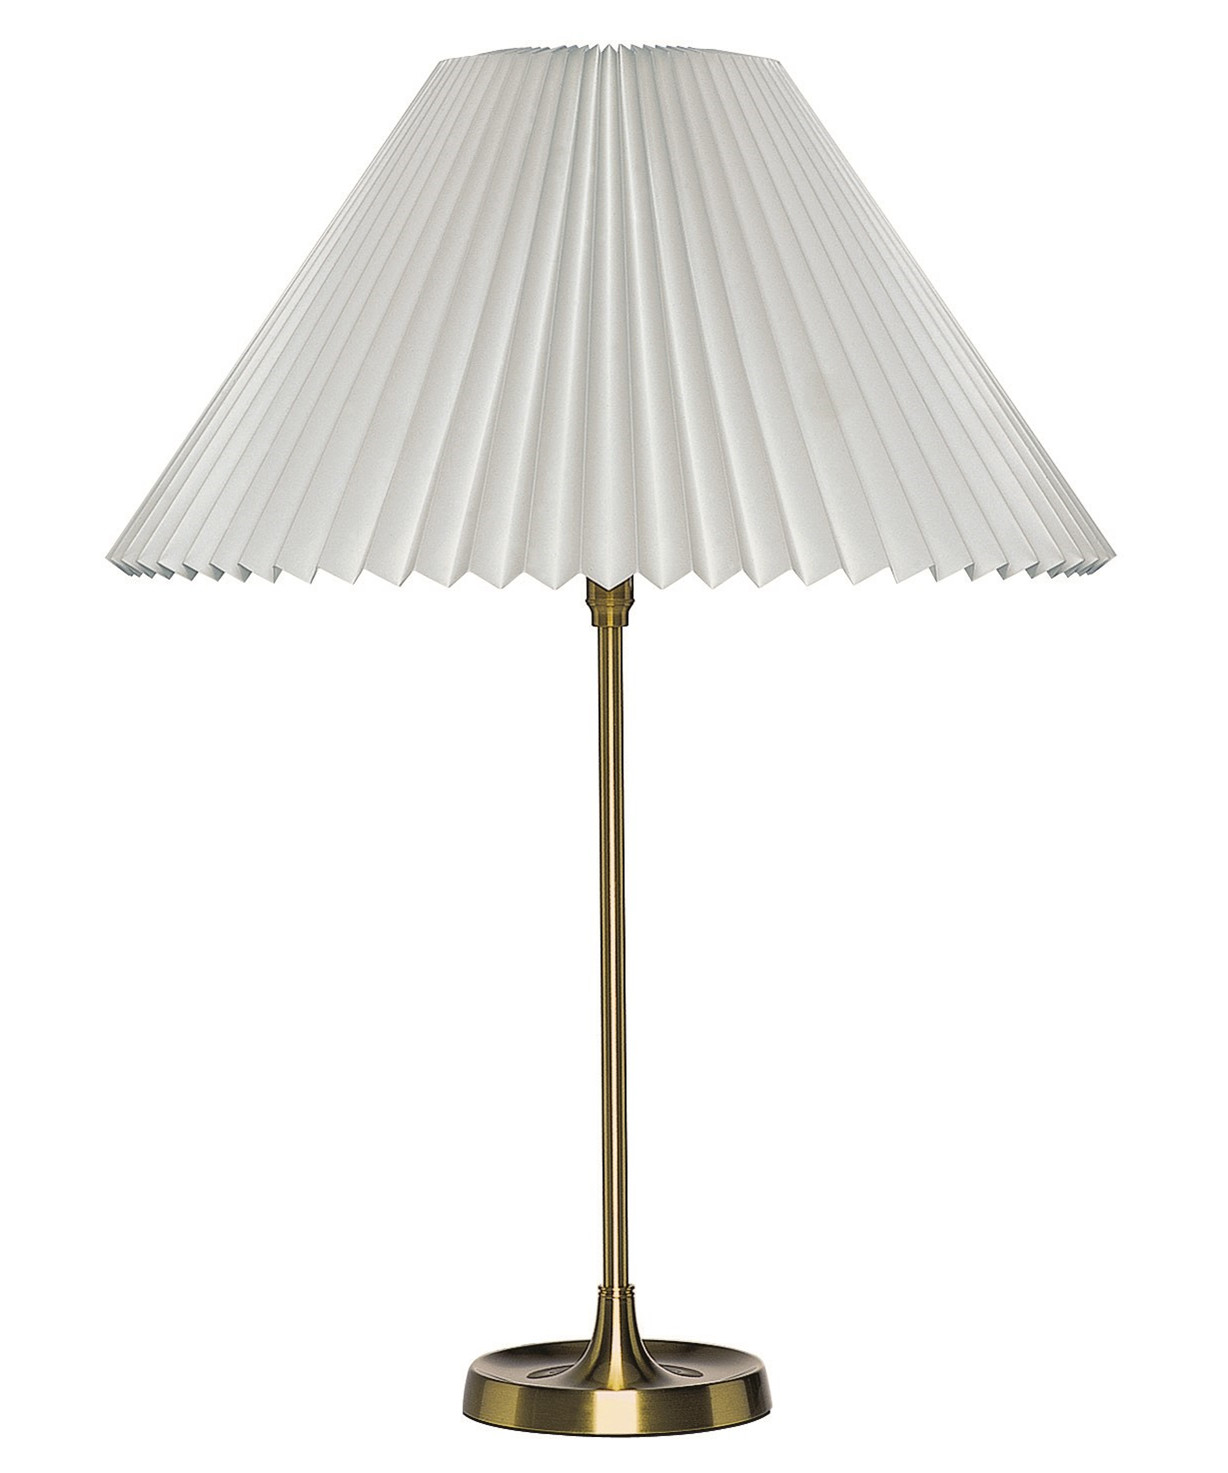 Le Klint - 307 Tafellamp